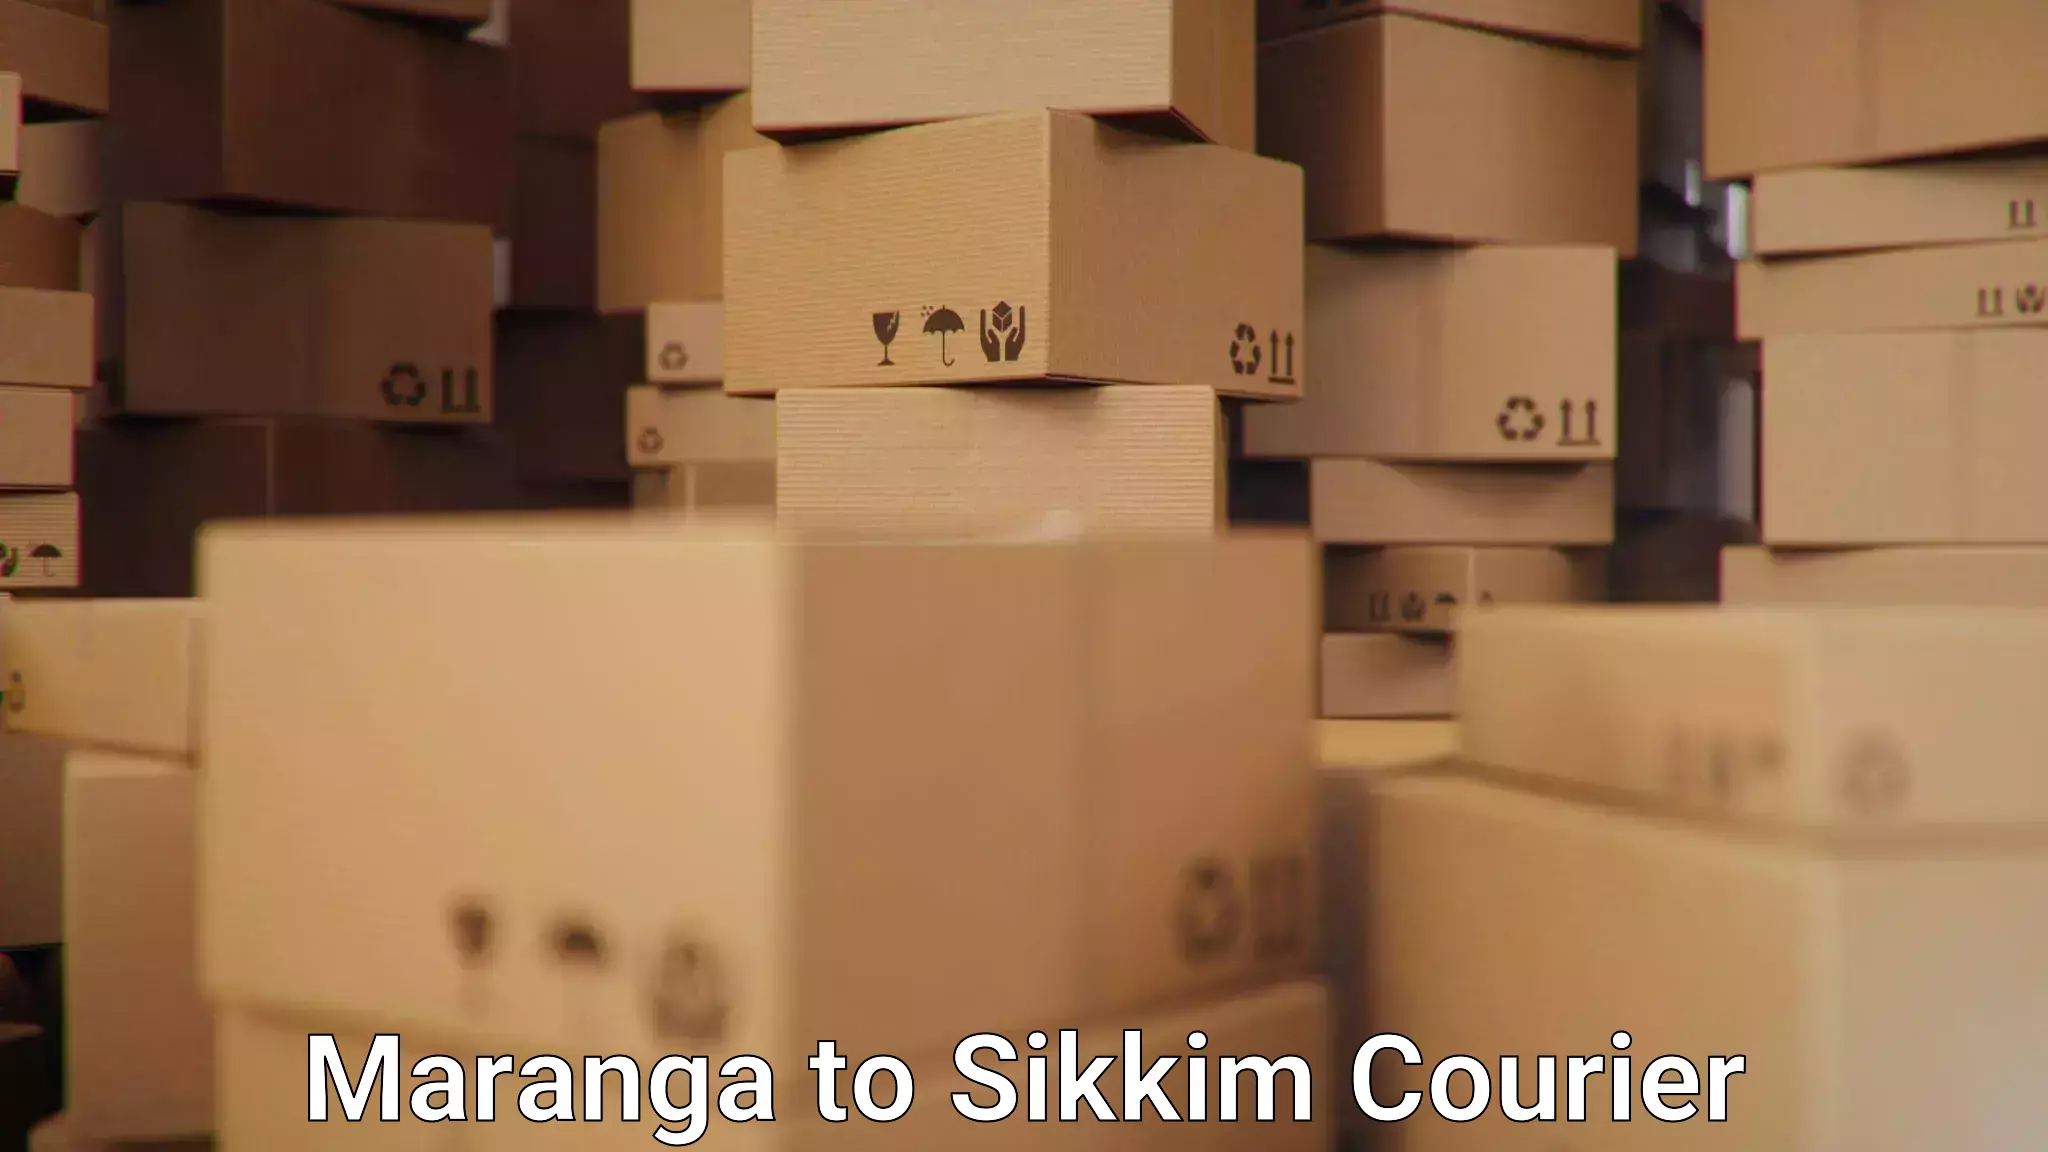 Global courier networks Maranga to Sikkim